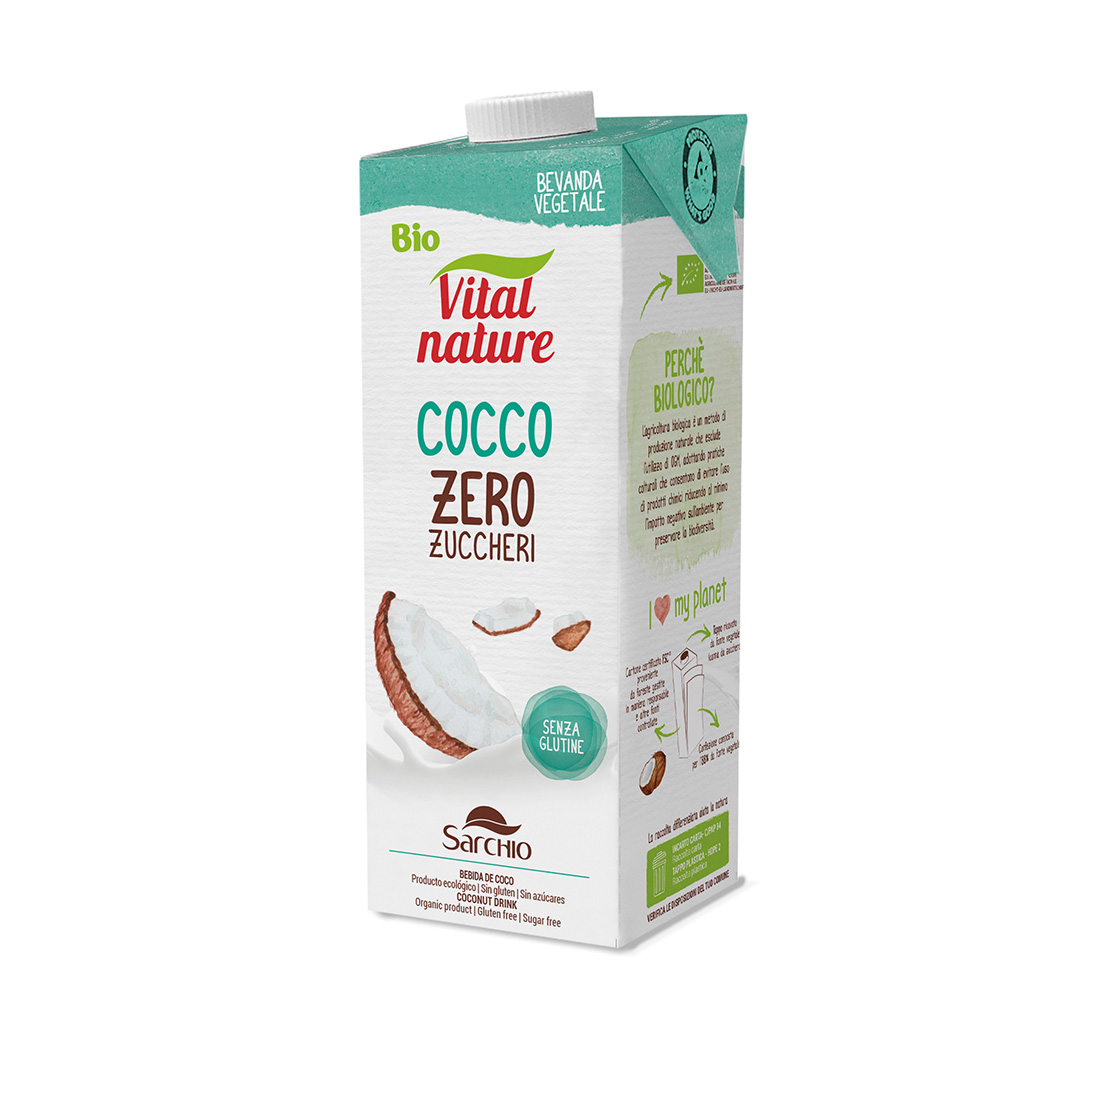 Bevanda cocco zero zuccheri 1000ml